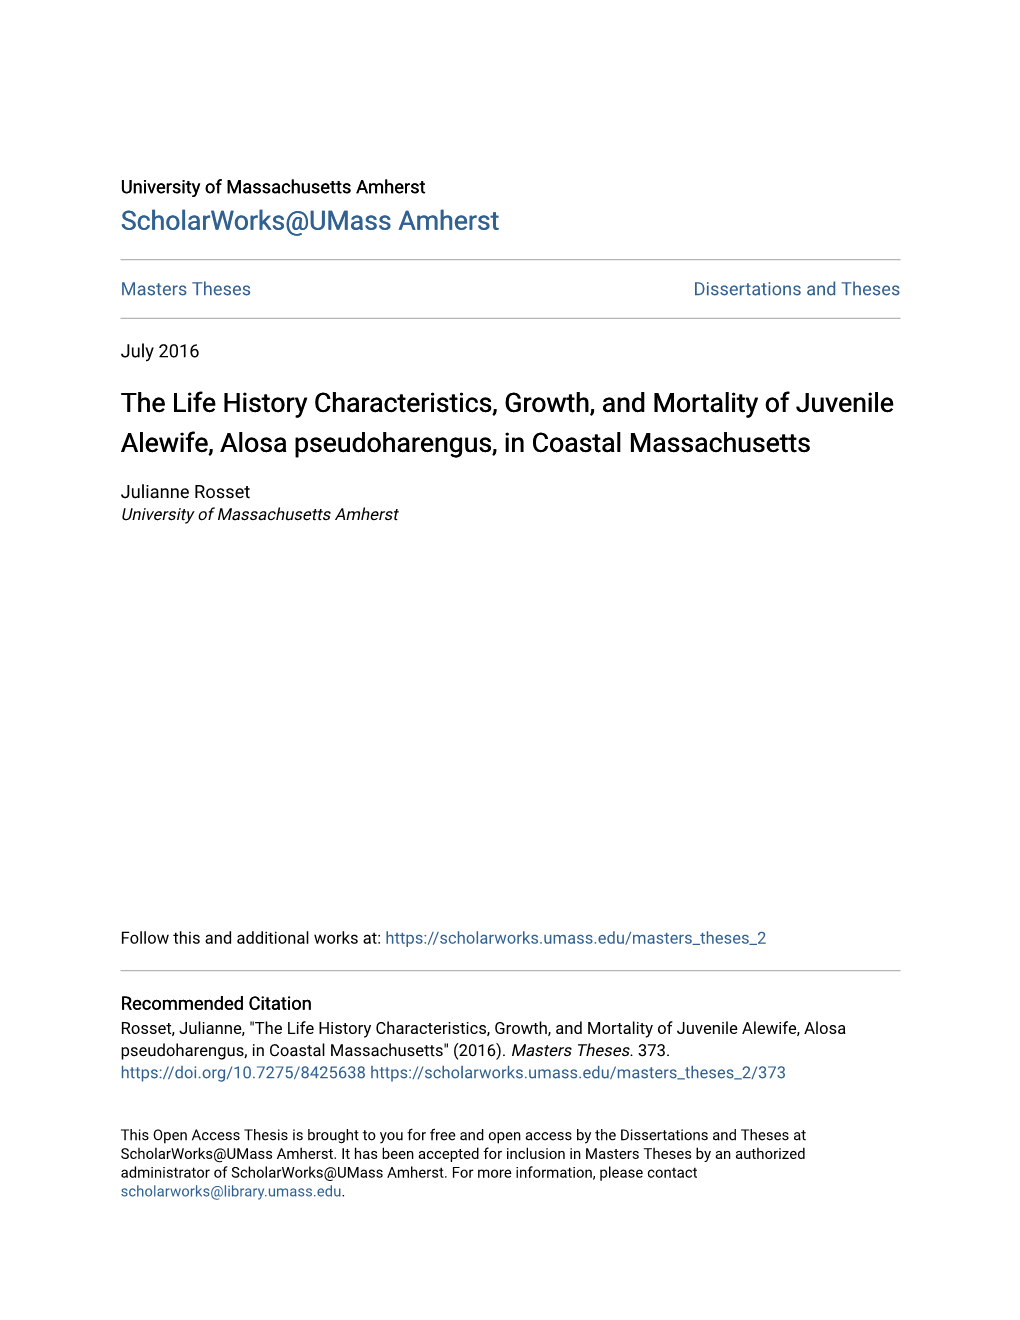 The Life History Characteristics, Growth, and Mortality of Juvenile Alewife, Alosa Pseudoharengus, in Coastal Massachusetts